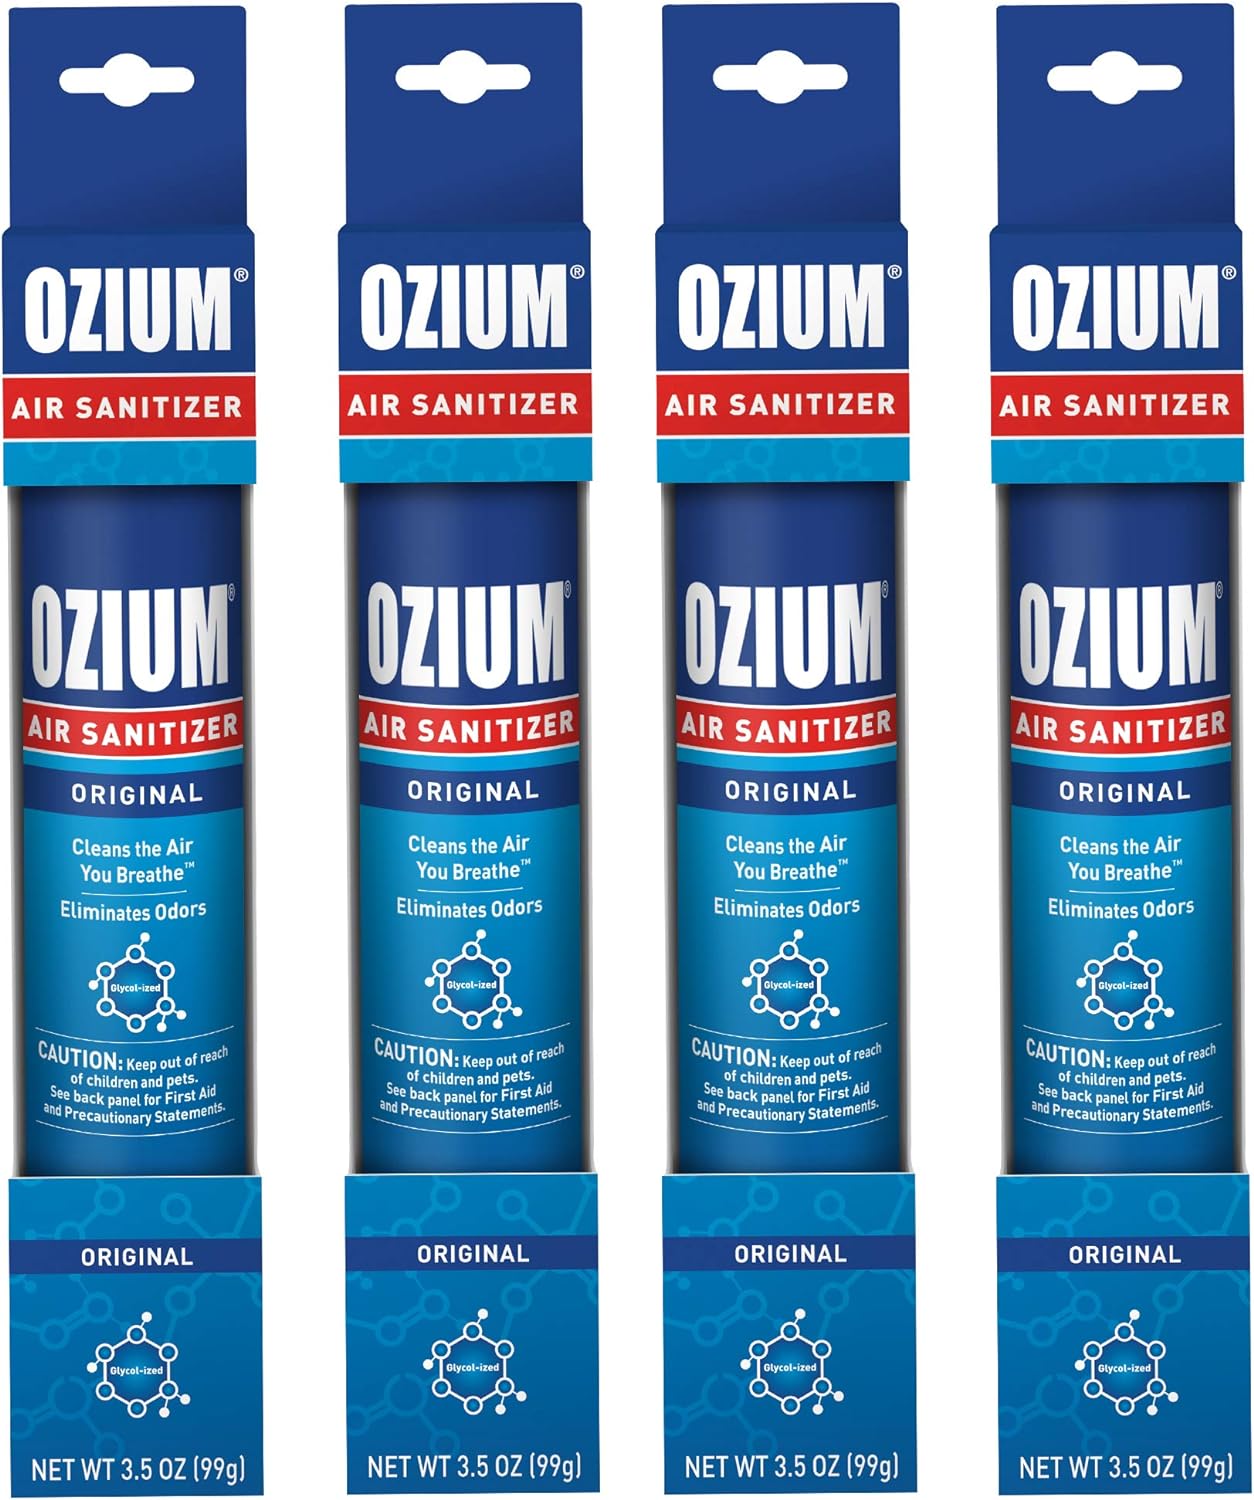 Ozium 3.5 Oz. Air Sanitizer & Odor Eliminator for Homes, Cars, Offices and More, Original Scent, 4 Pack